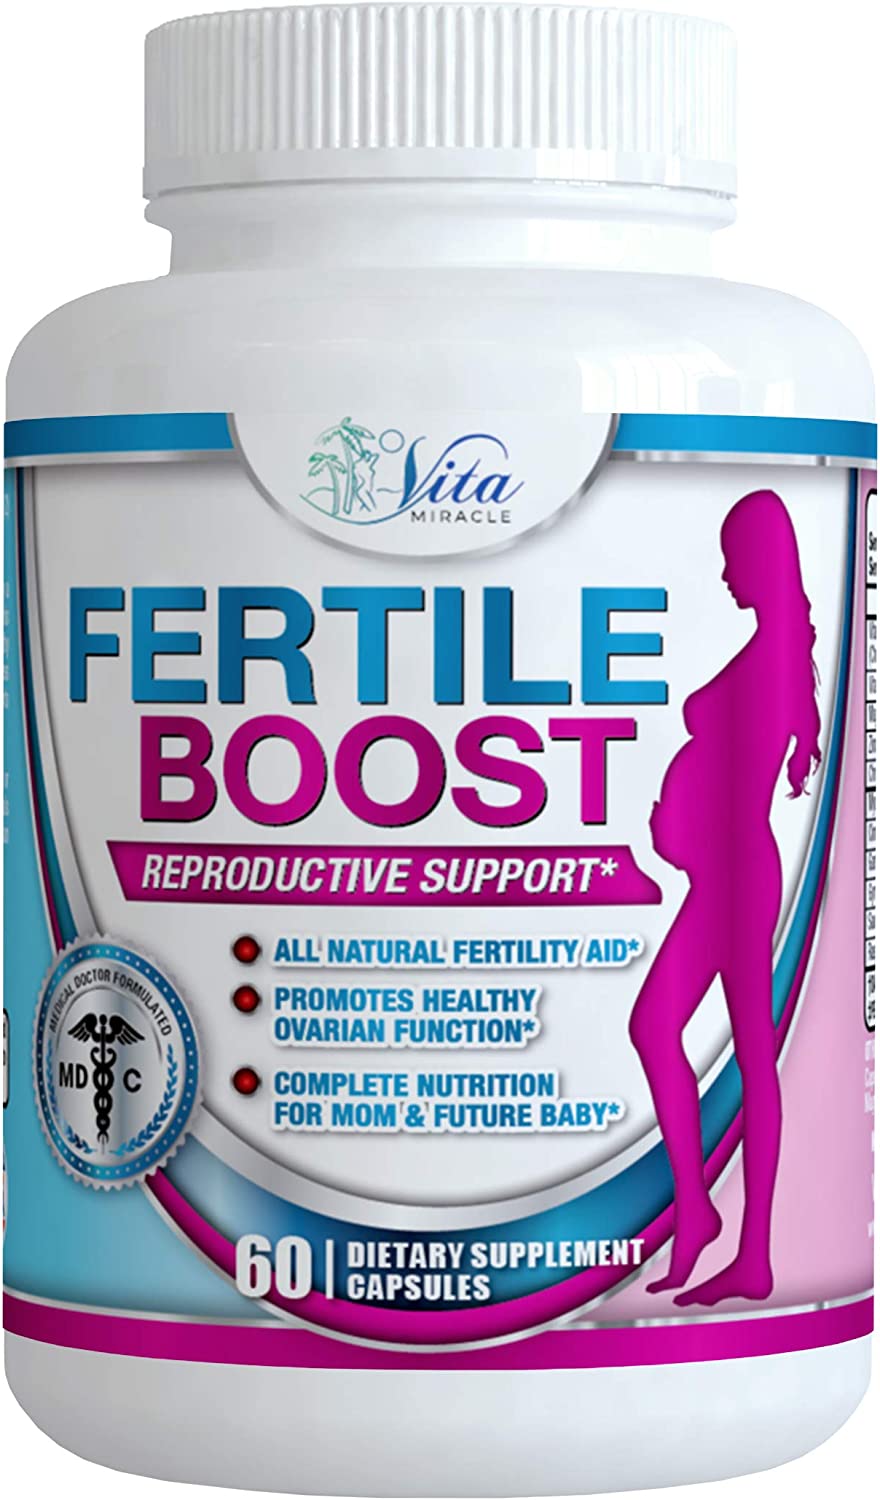 Dr Formulated Fertility Supplements for Women